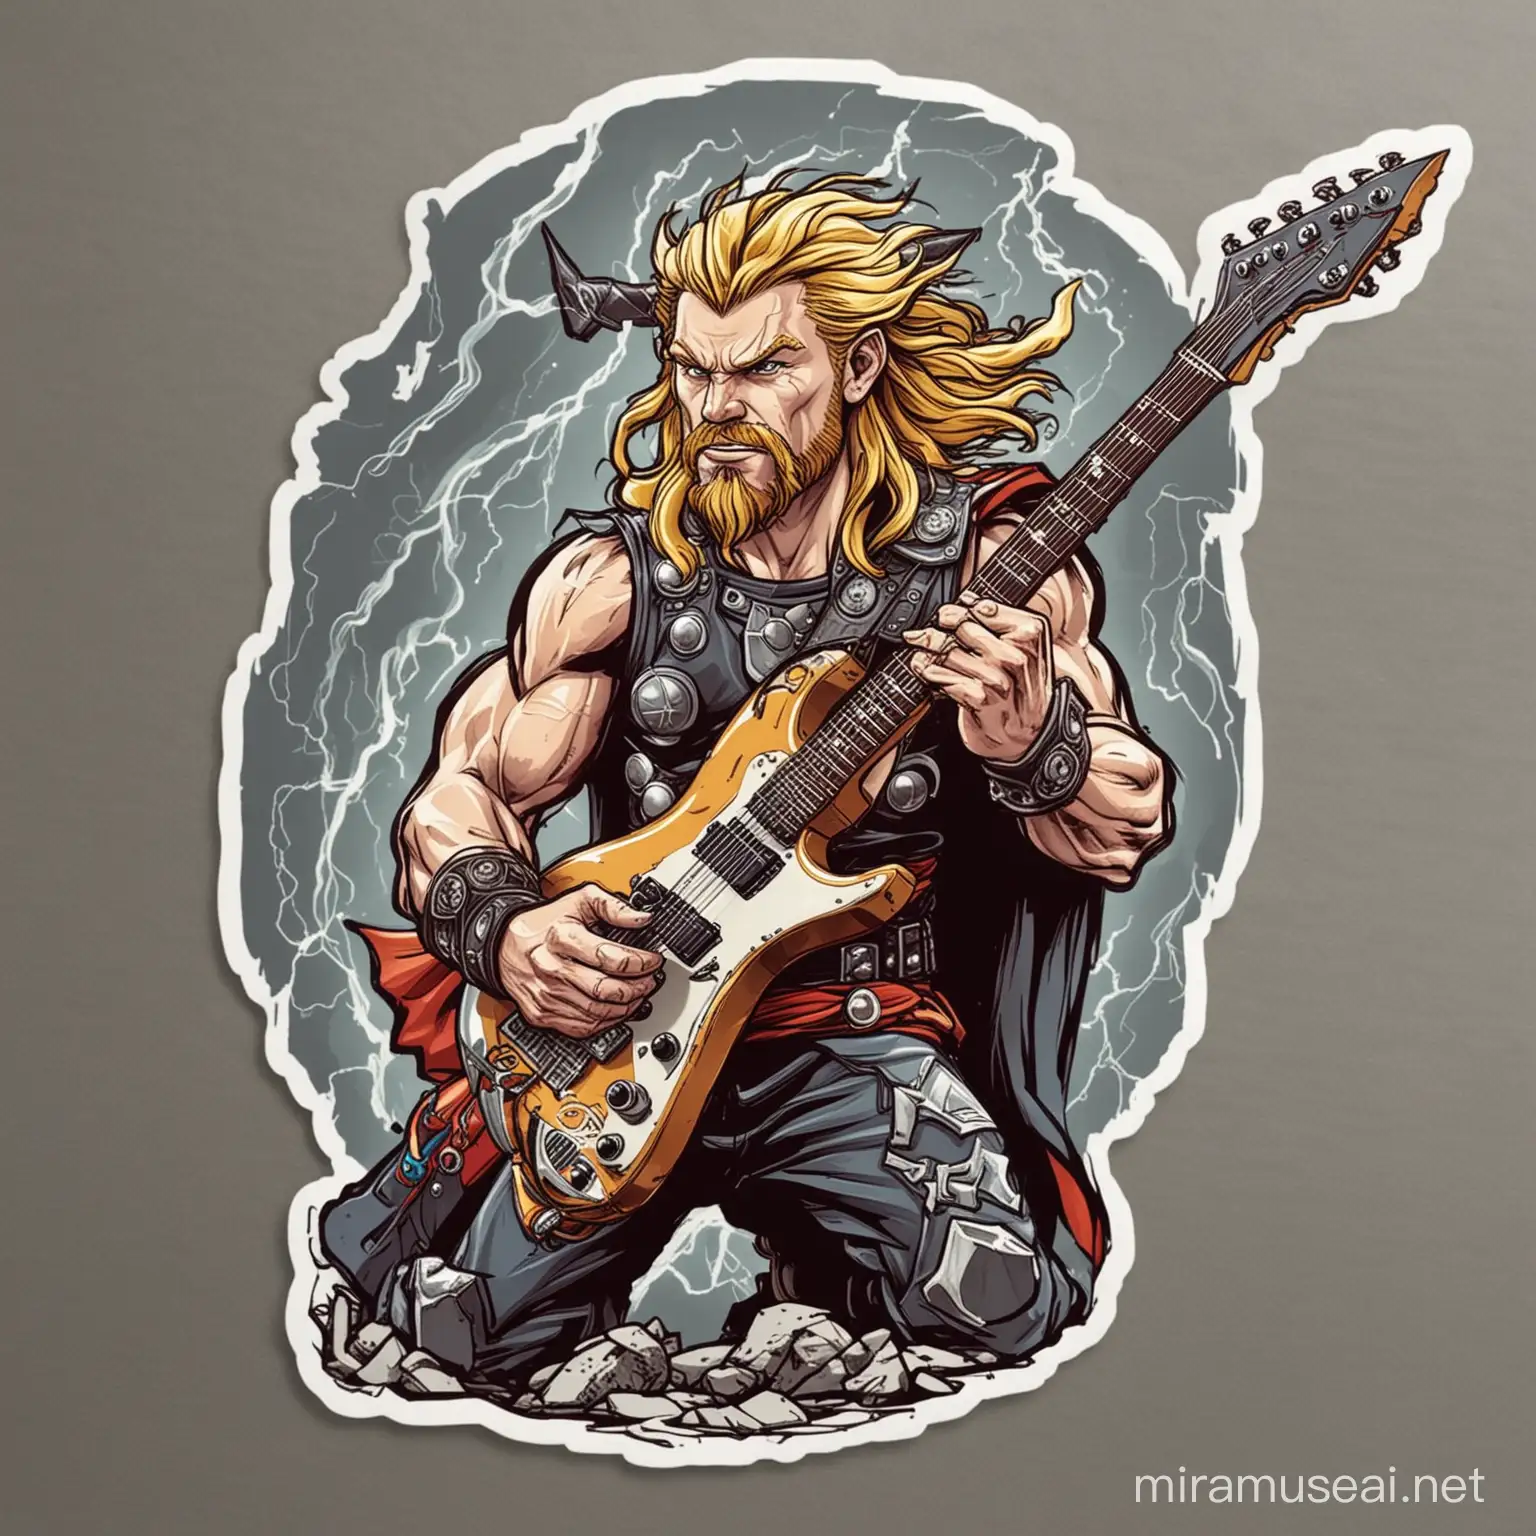 drawing stiker of thur god of thunder as a rock star plaing at electric gitar